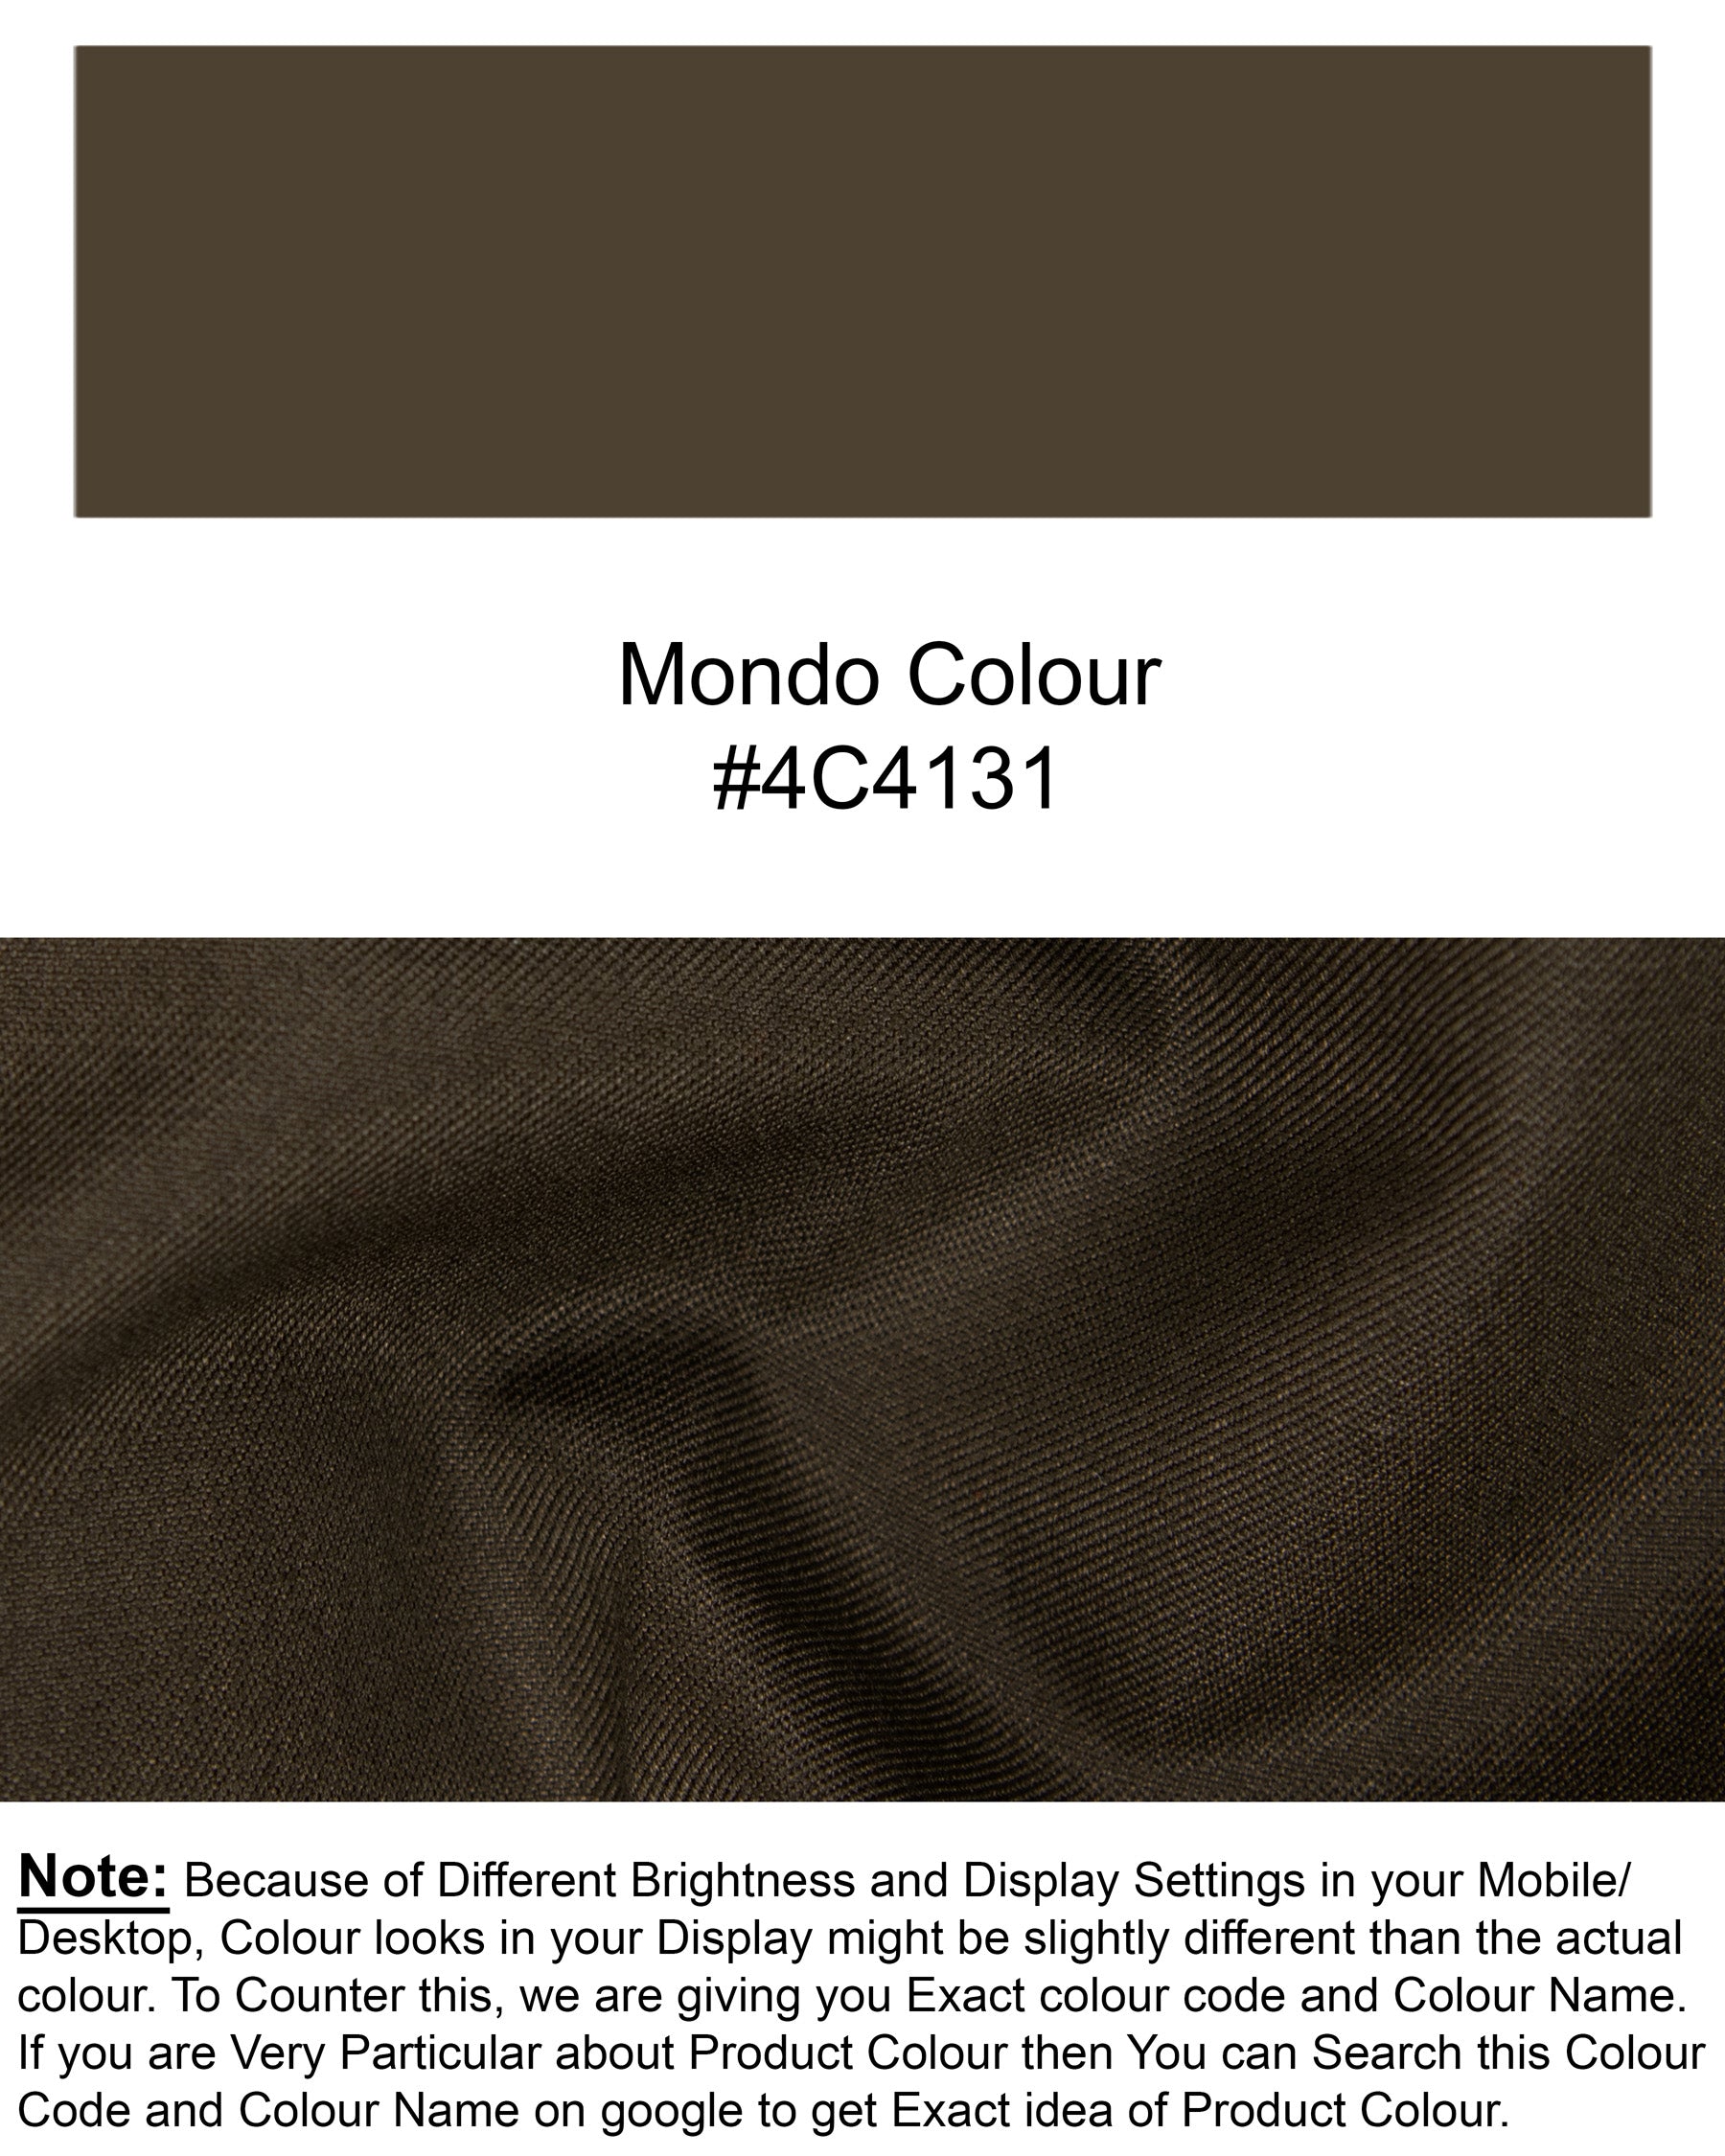 Mondo Brown Premium Cotton Waistcoat V1312-36, V1312-38, V1312-40, V1312-42, V1312-44, V1312-46, V1312-48, V1312-50, V1312-52, V1312-54, V1312-56, V1312-58, V1312-60